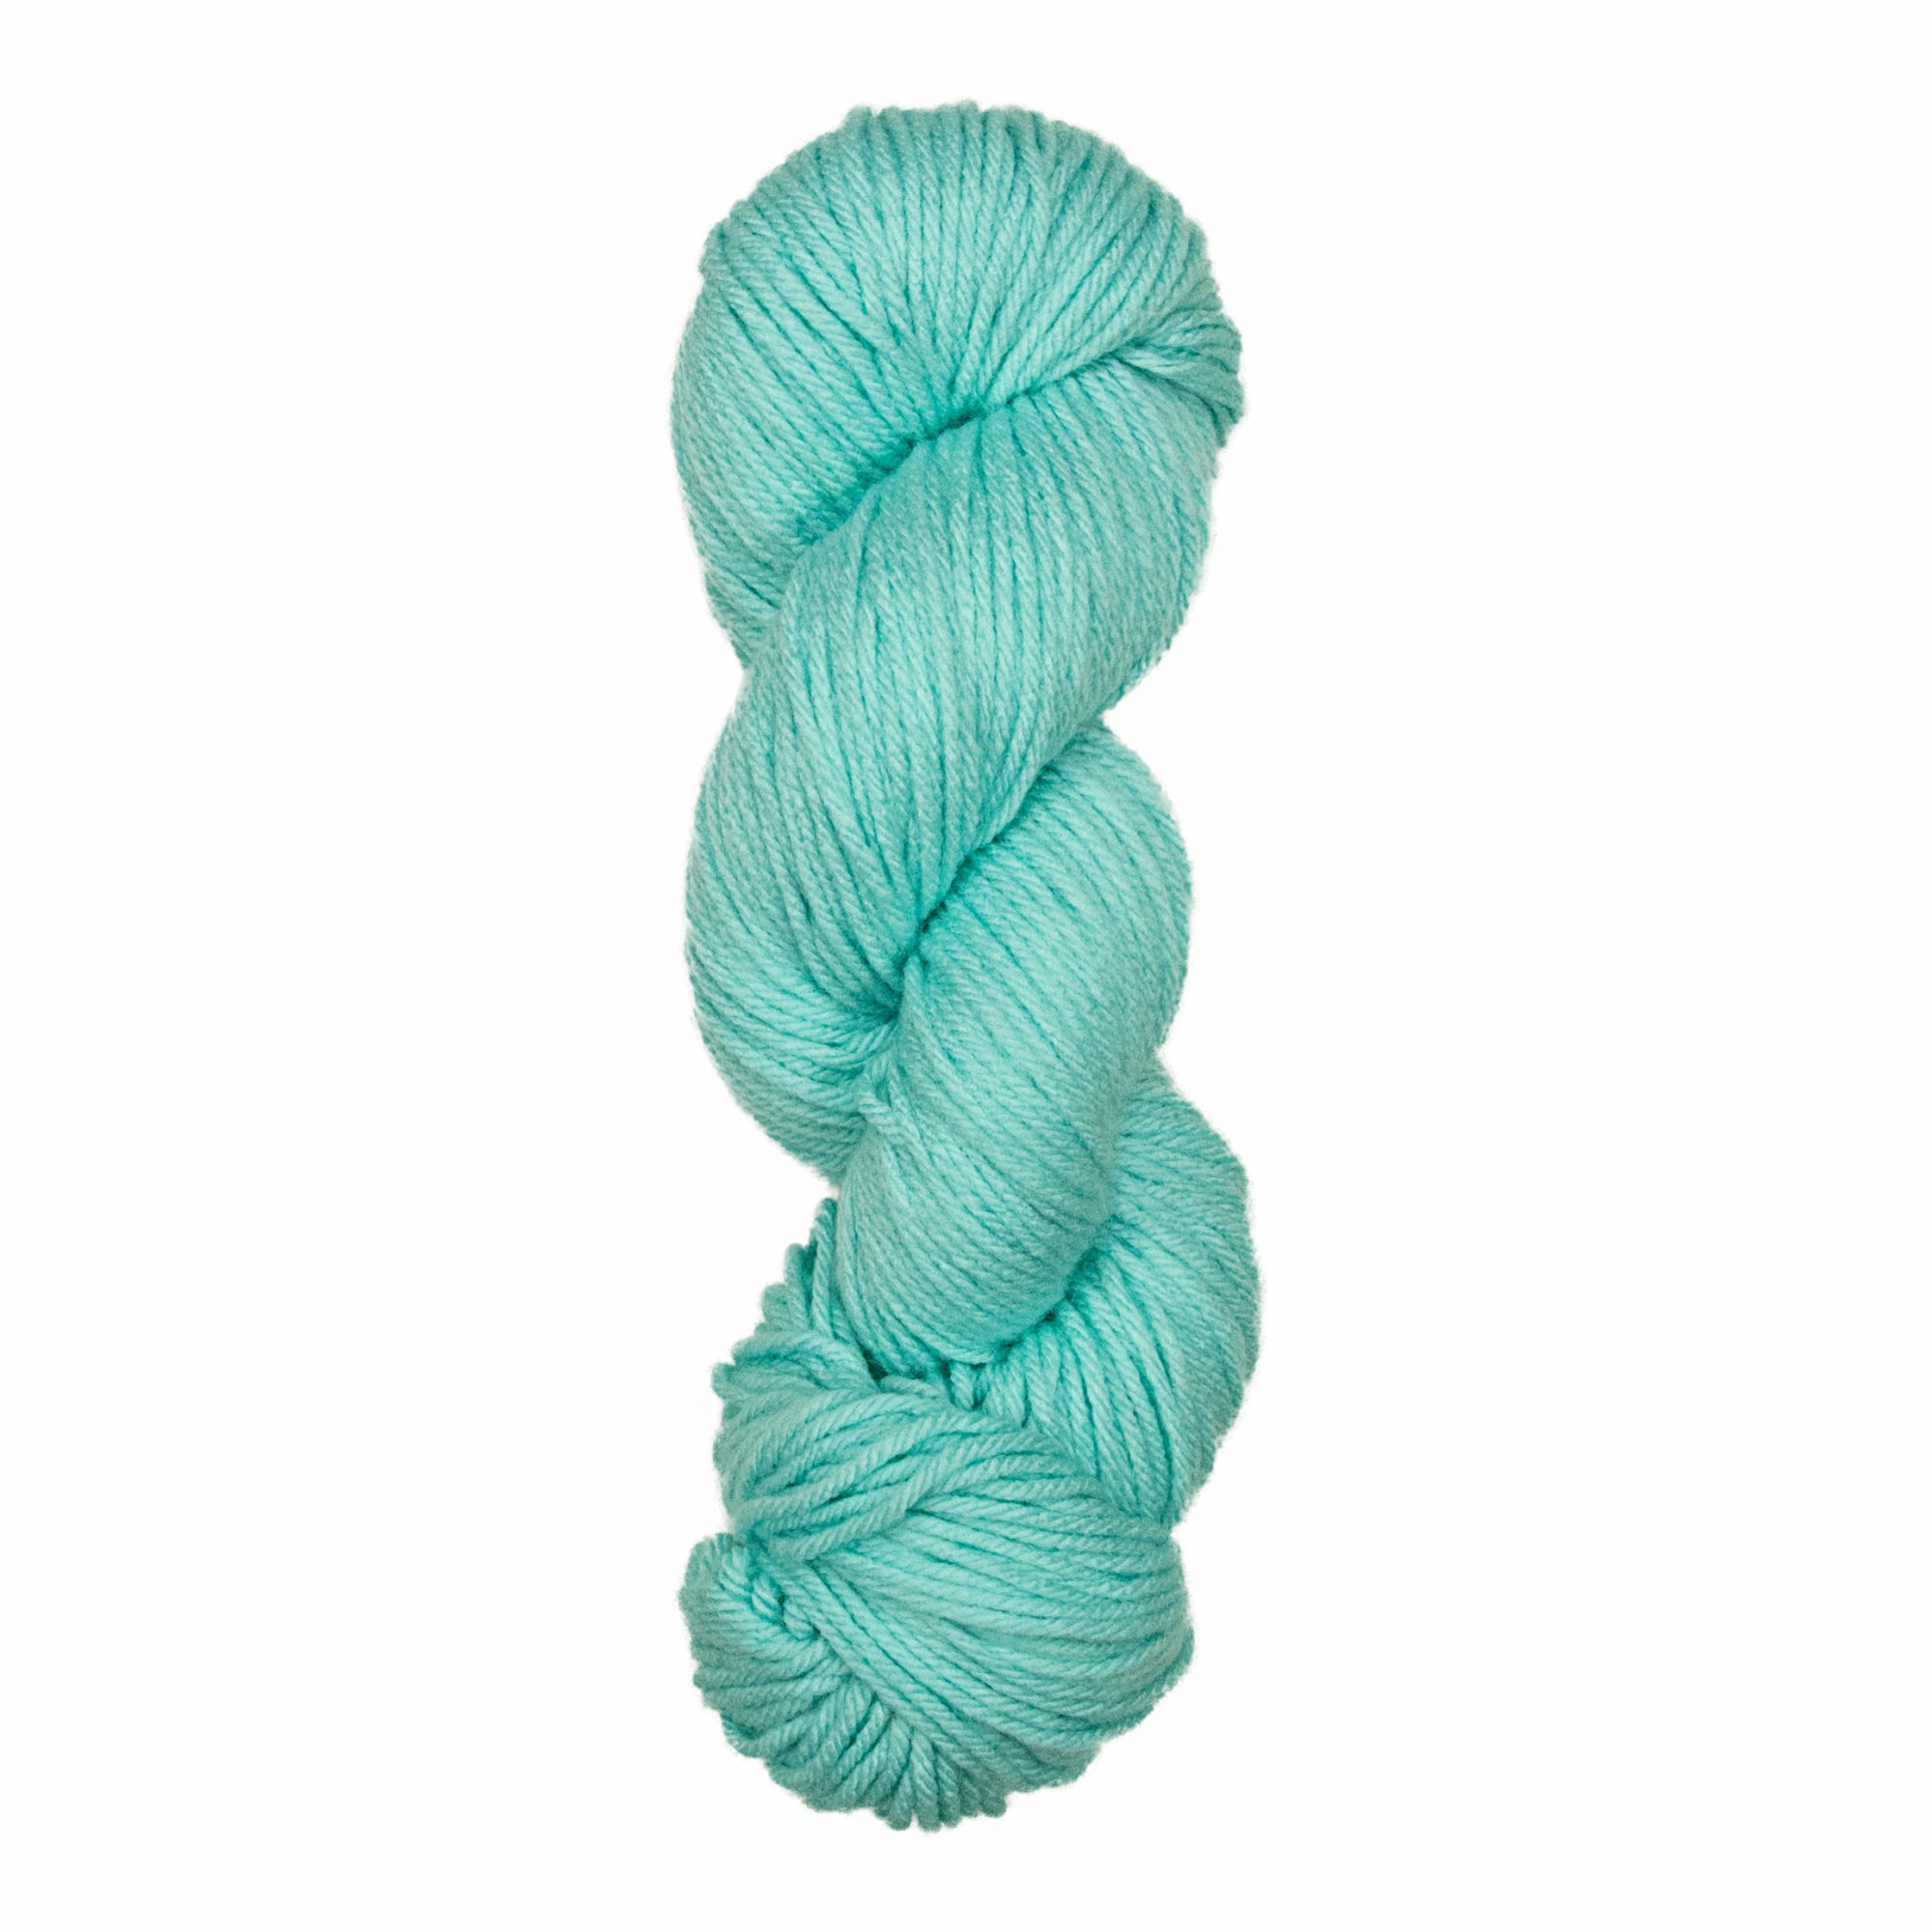 Alisha Knitting Yarn